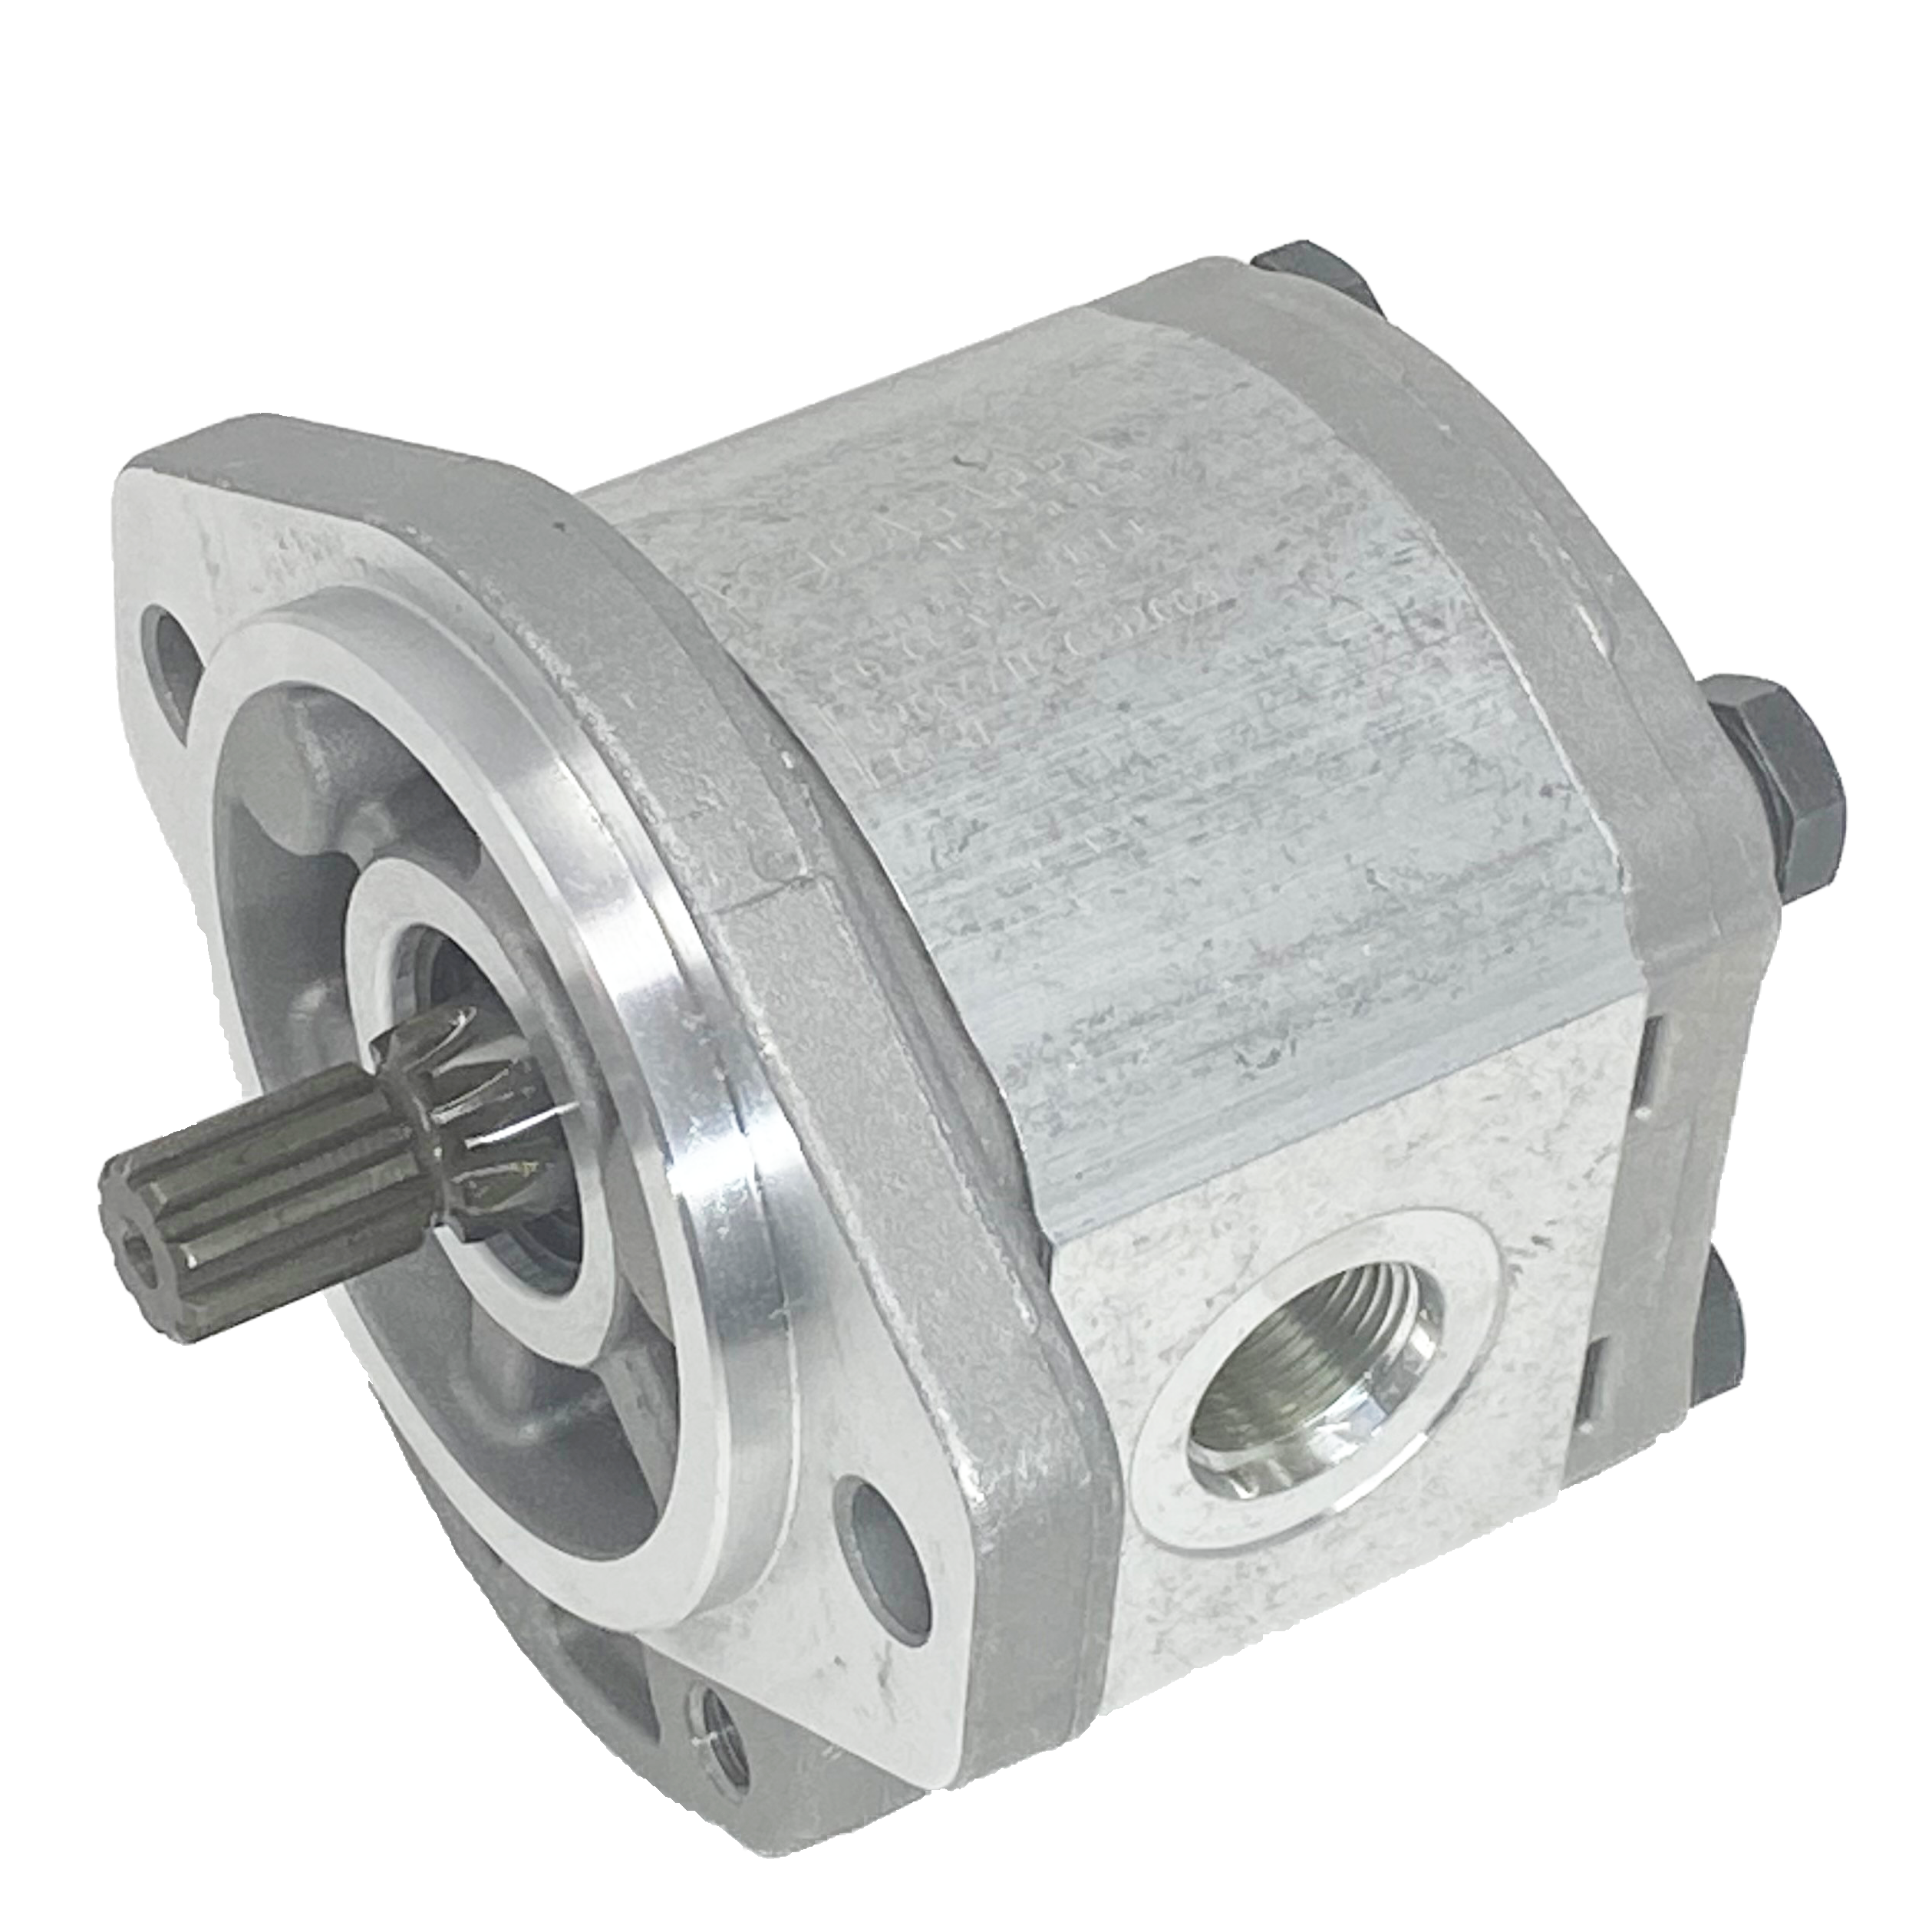 PLM20.8B0-03S1-LOC/OC-N-EL : Casappa Polaris Gear Motor, 8.26cc, 3625psi Rated, 3500RPM, Reversible Interior Drain, 9T 16/32dp Shaft, SAE A 2-Bolt Flange, 0.625 (5/8") #10 SAE Inlet, 0.625 (5/8") #10 SAE Outlet, Aluminum Body & Flange